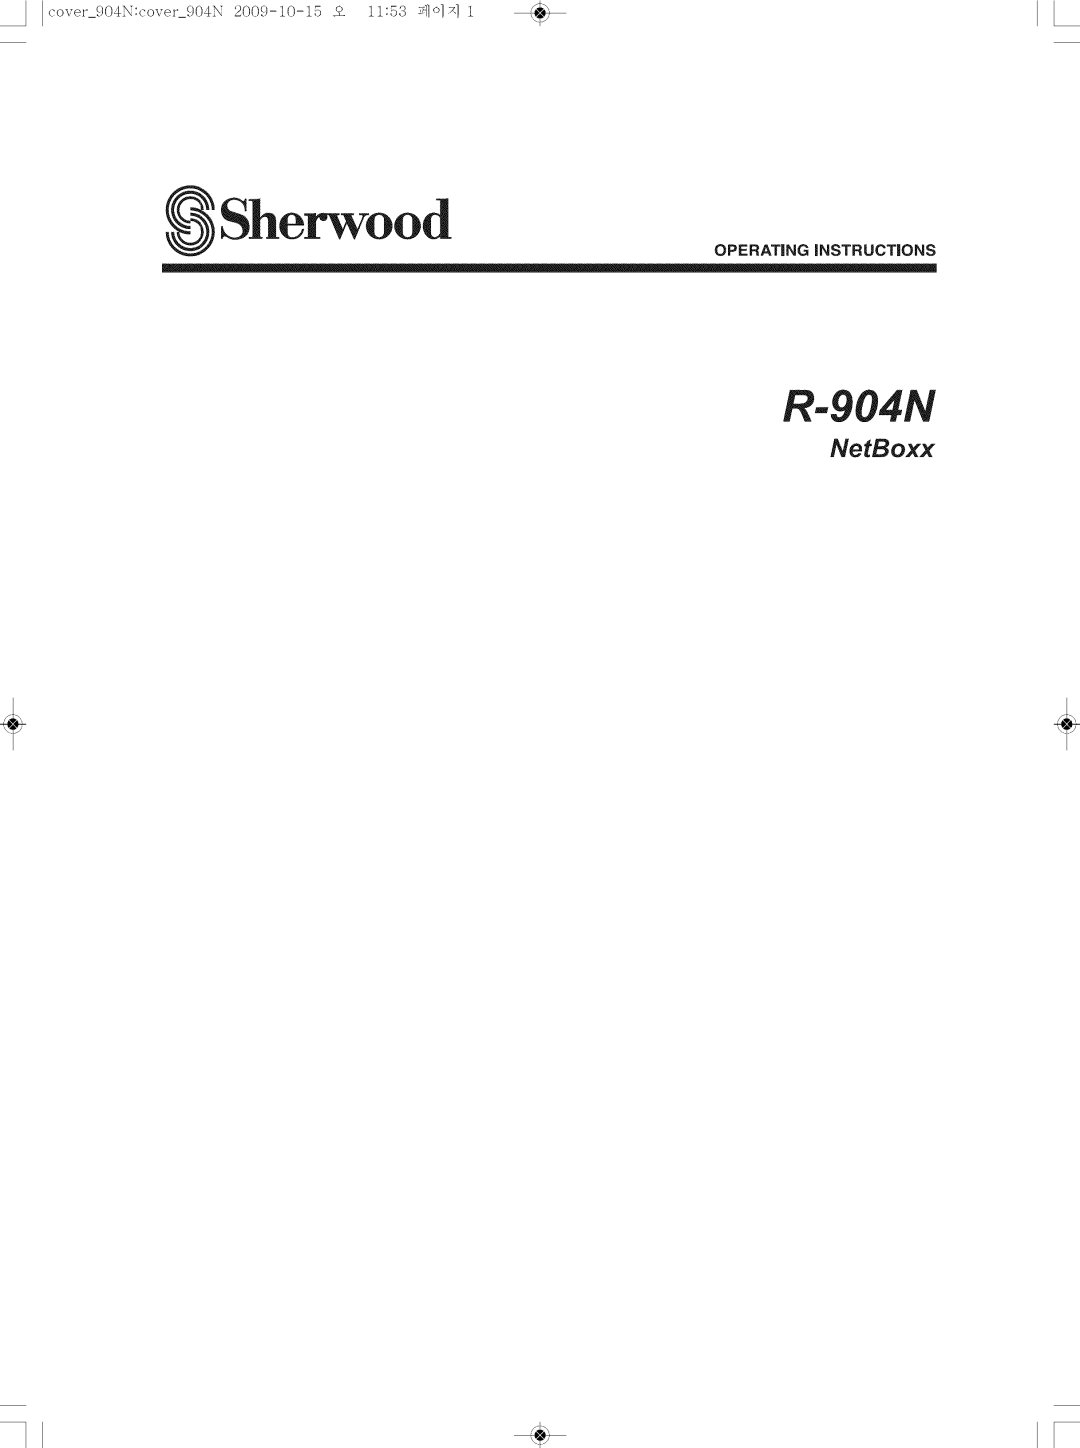 Sherwood R-904N manual NetBoxx, _Sherwood, R..I, OPERATING iNSTRUCTIONS 